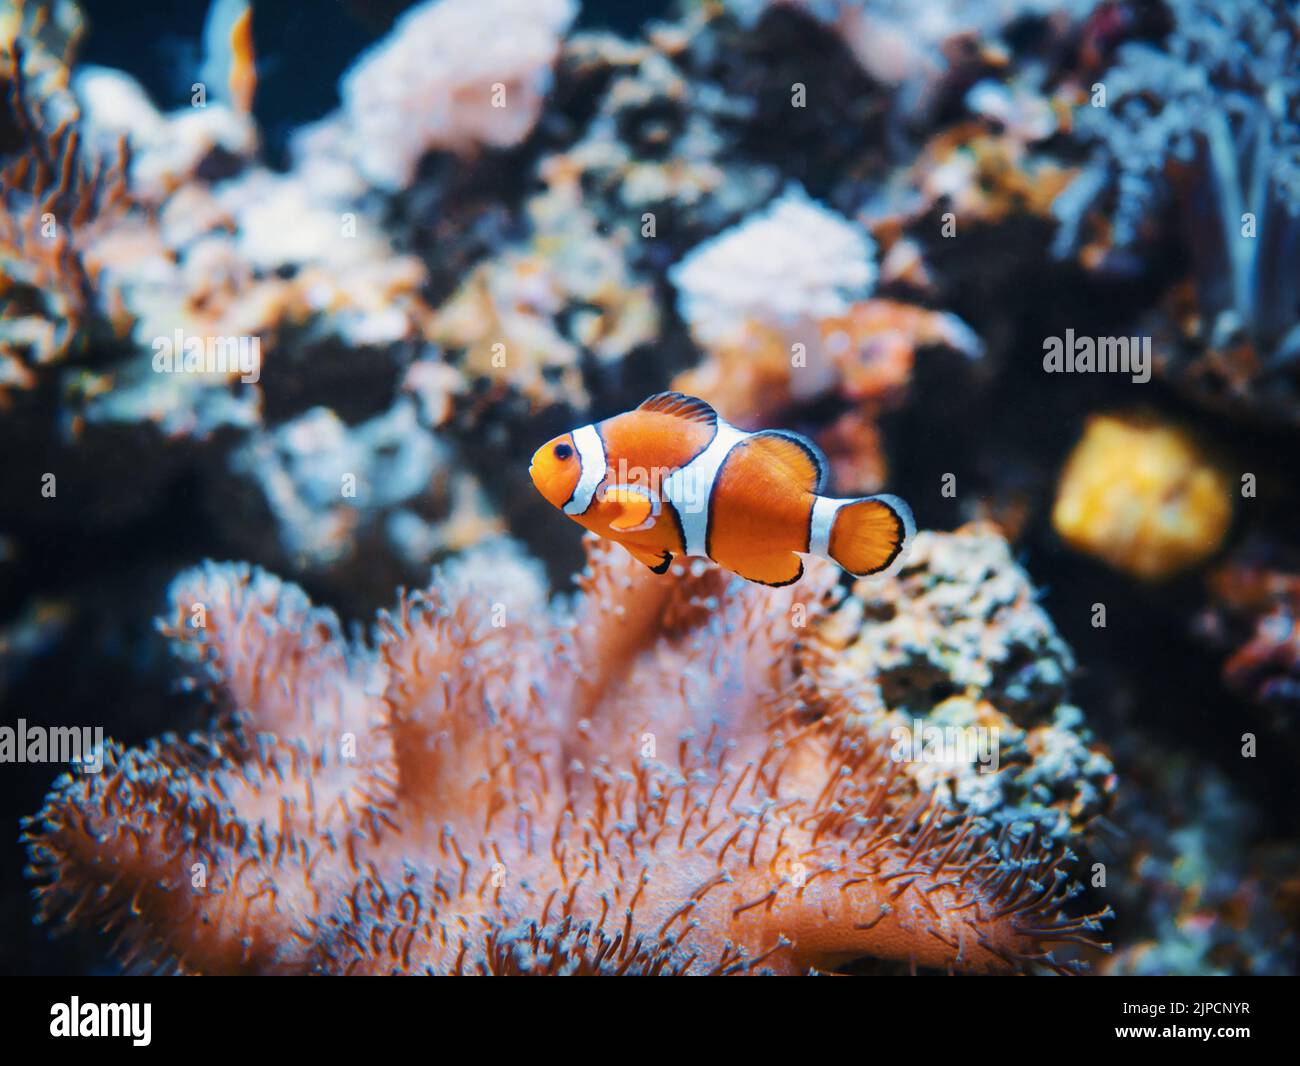 Sea anemone and clown fish in marine aquarium. On black background Stock Photo